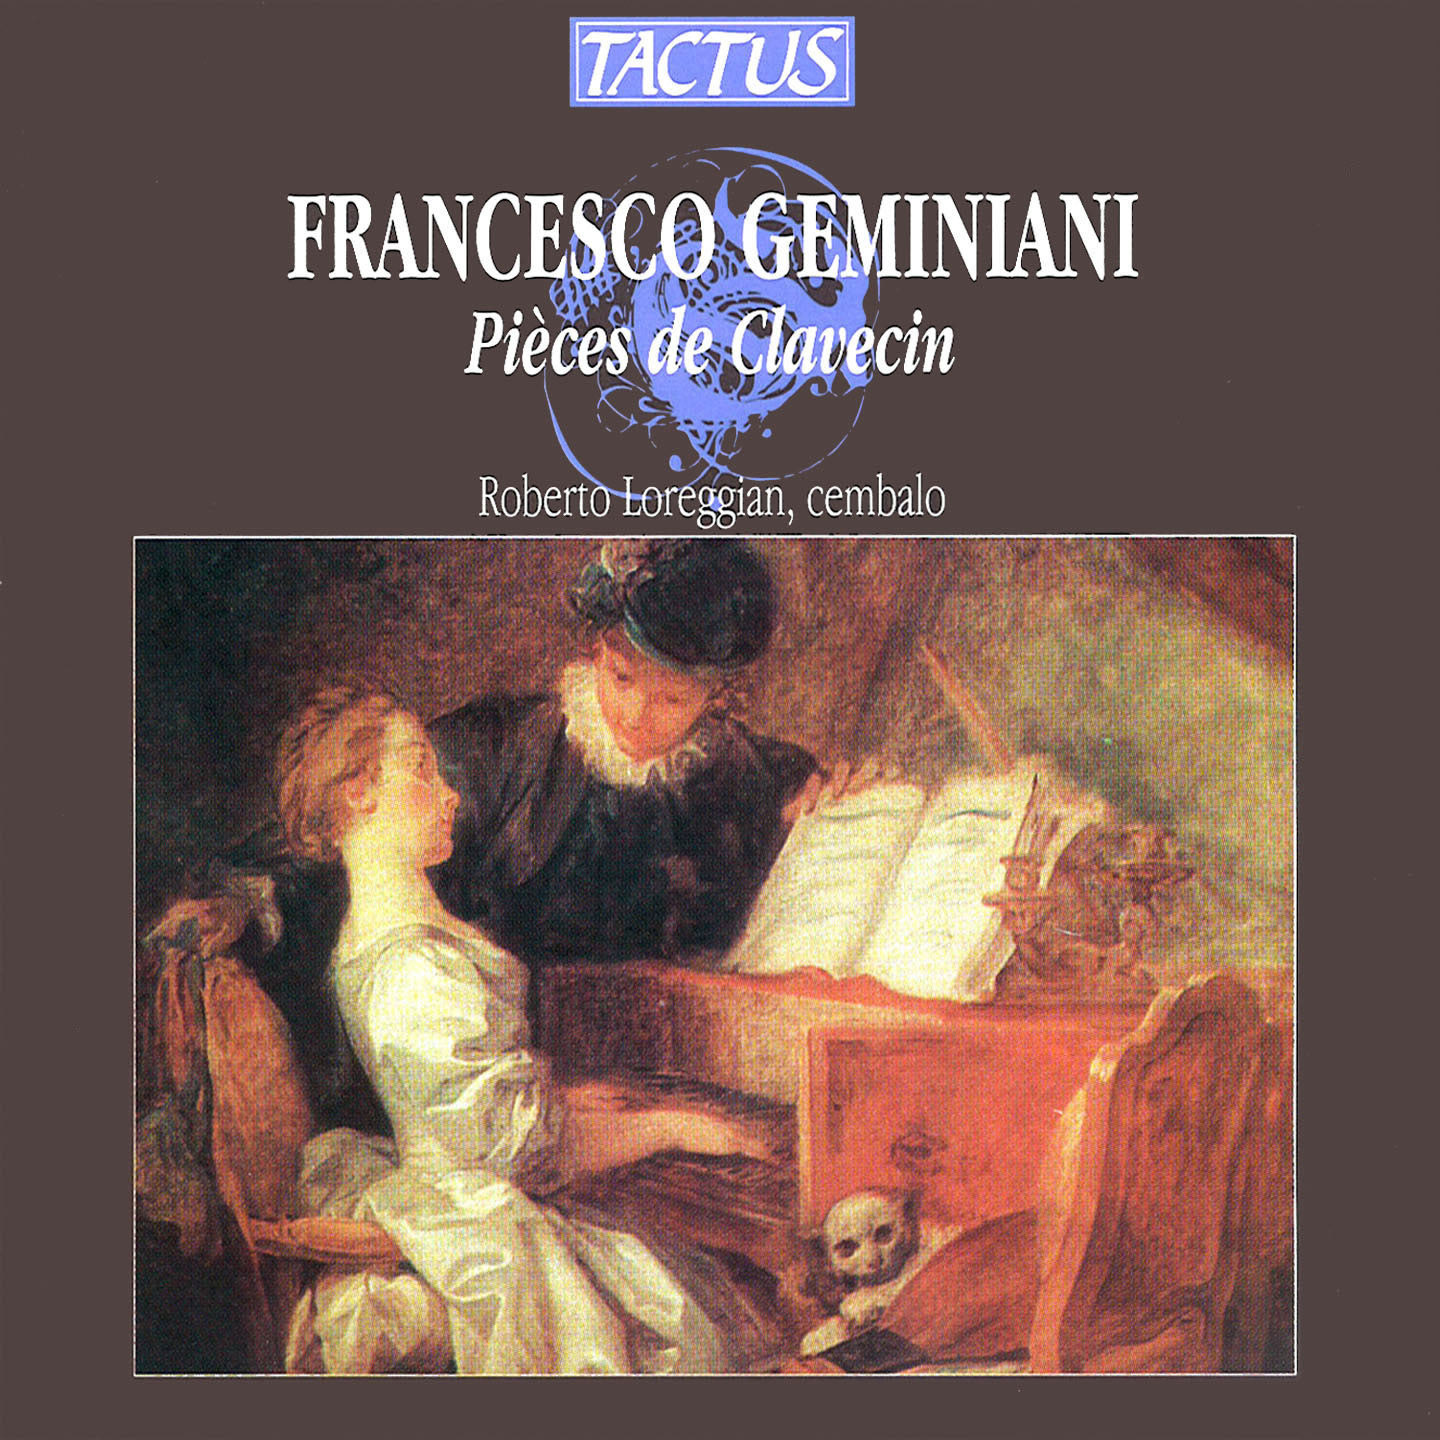 Geminiani - Pieces de clavecin - Roberto Loreggian